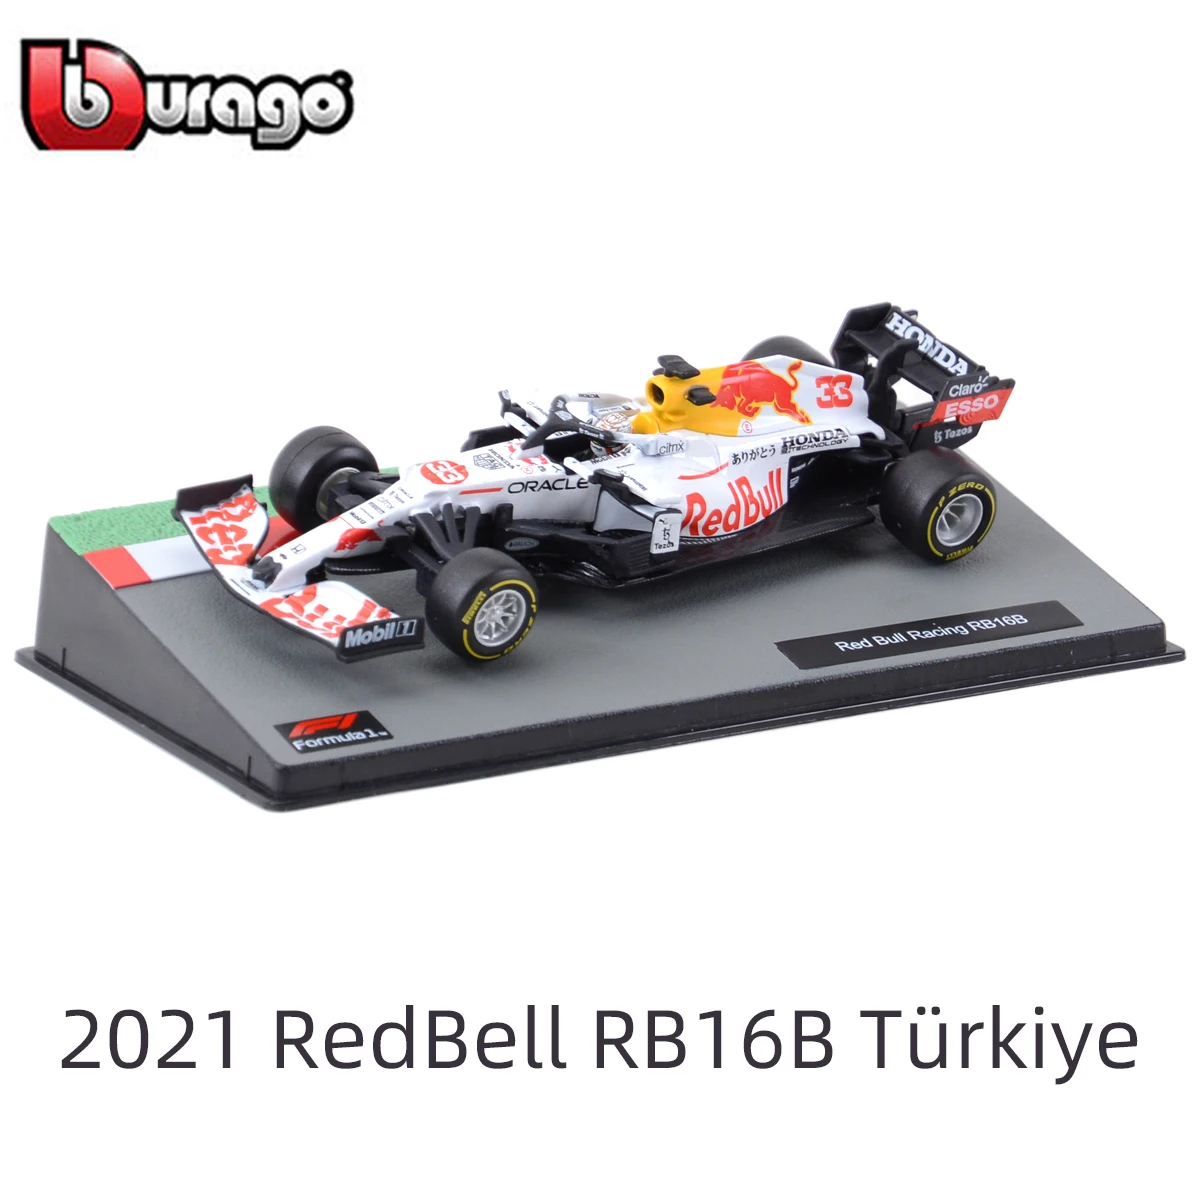 

Bburago 1:43 2021 RedBell RB16B #11 #33 Turkey F1 Formula Car Static Die Cast Vehicles Collectible Model Racing Car Toys